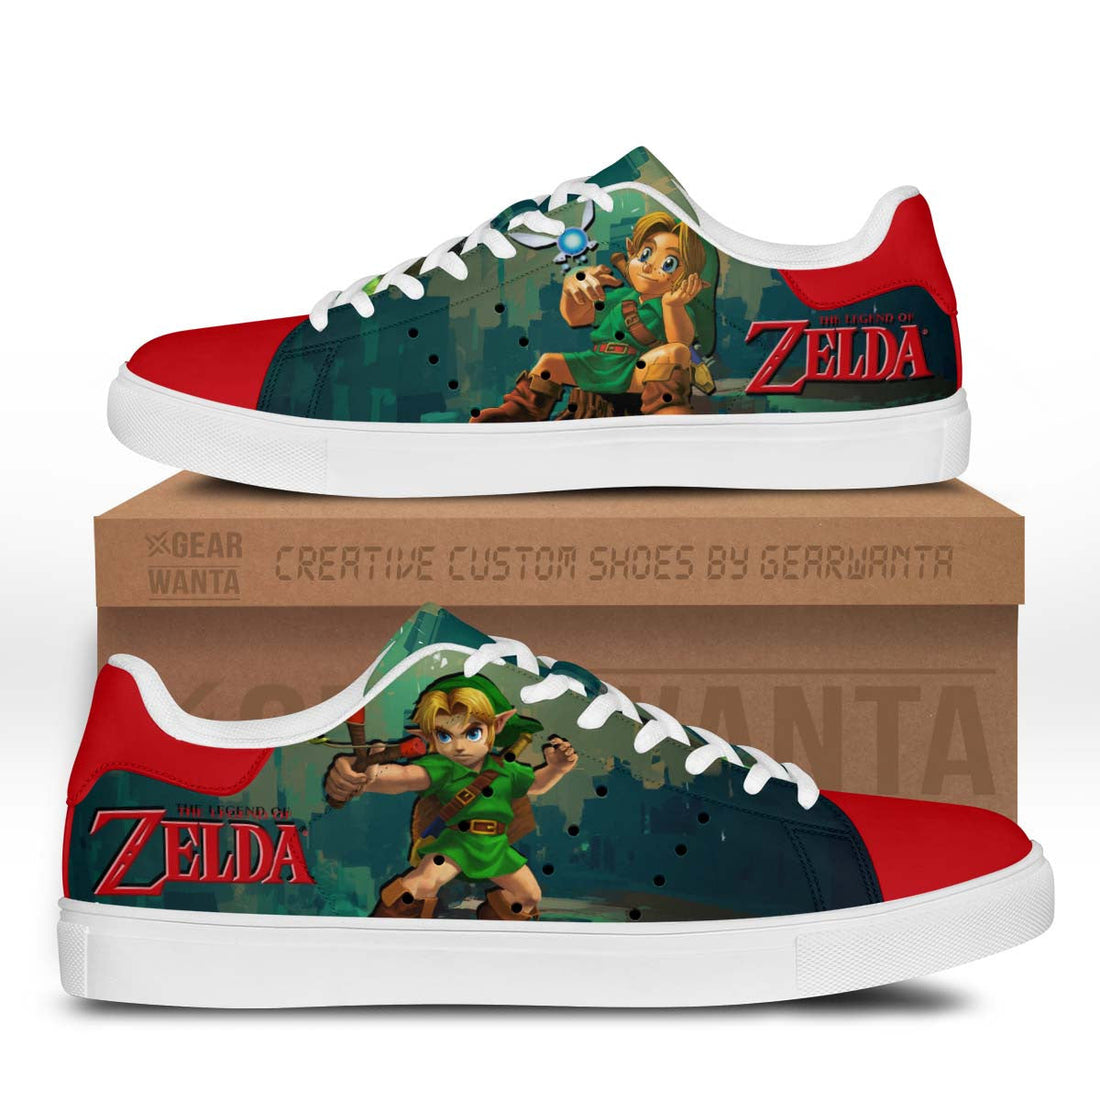 Link Stan Shoes Custom The Legend of Zelda Game Shoes-Gear Wanta